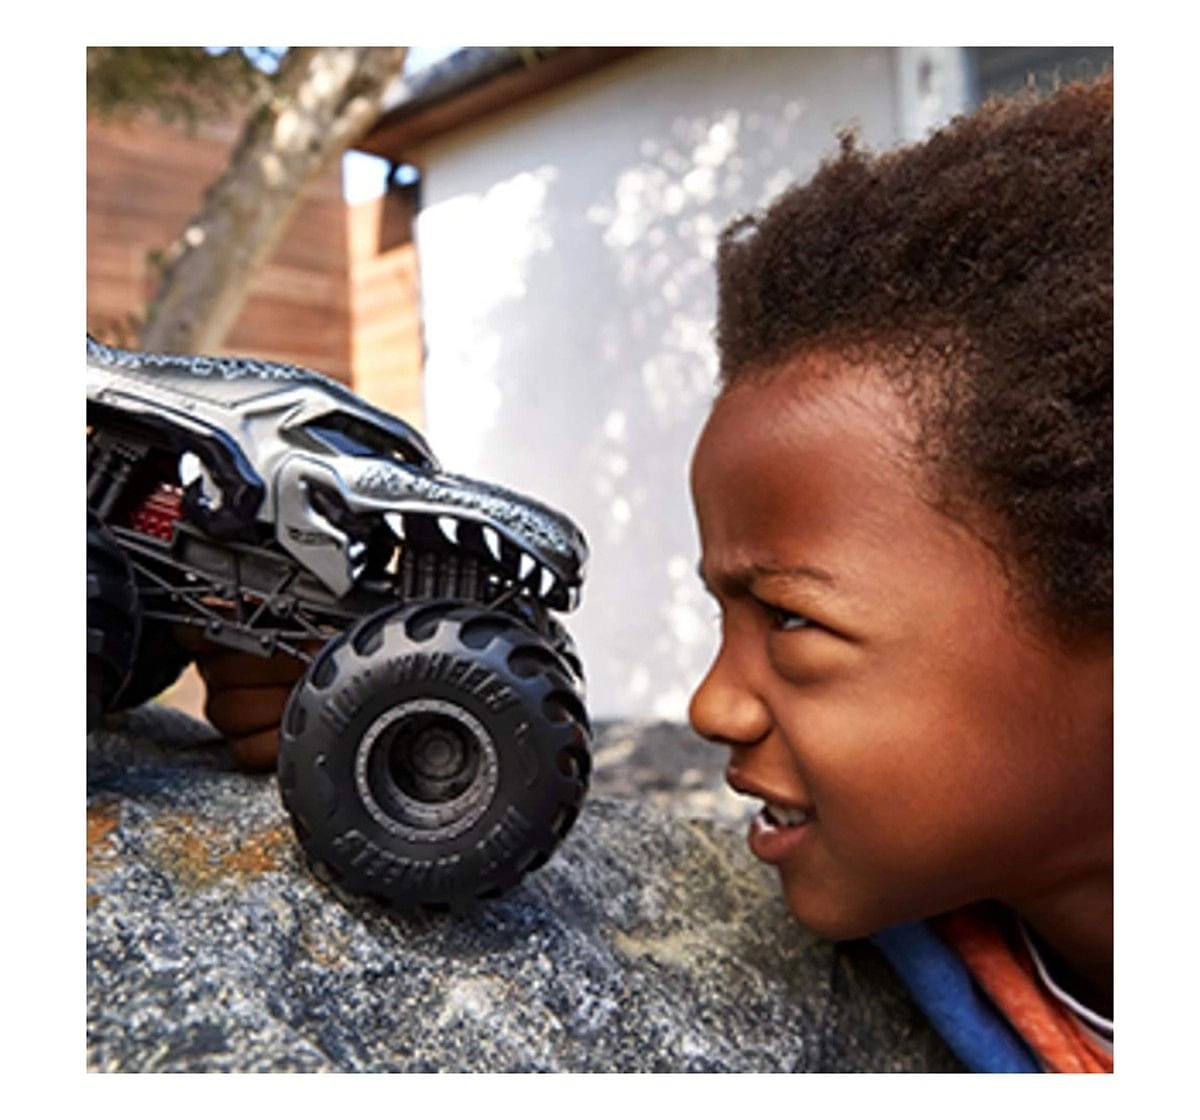 Shop Hot Wheels 1:24 Monster Trucks Vehicles for Kids age 3Y+